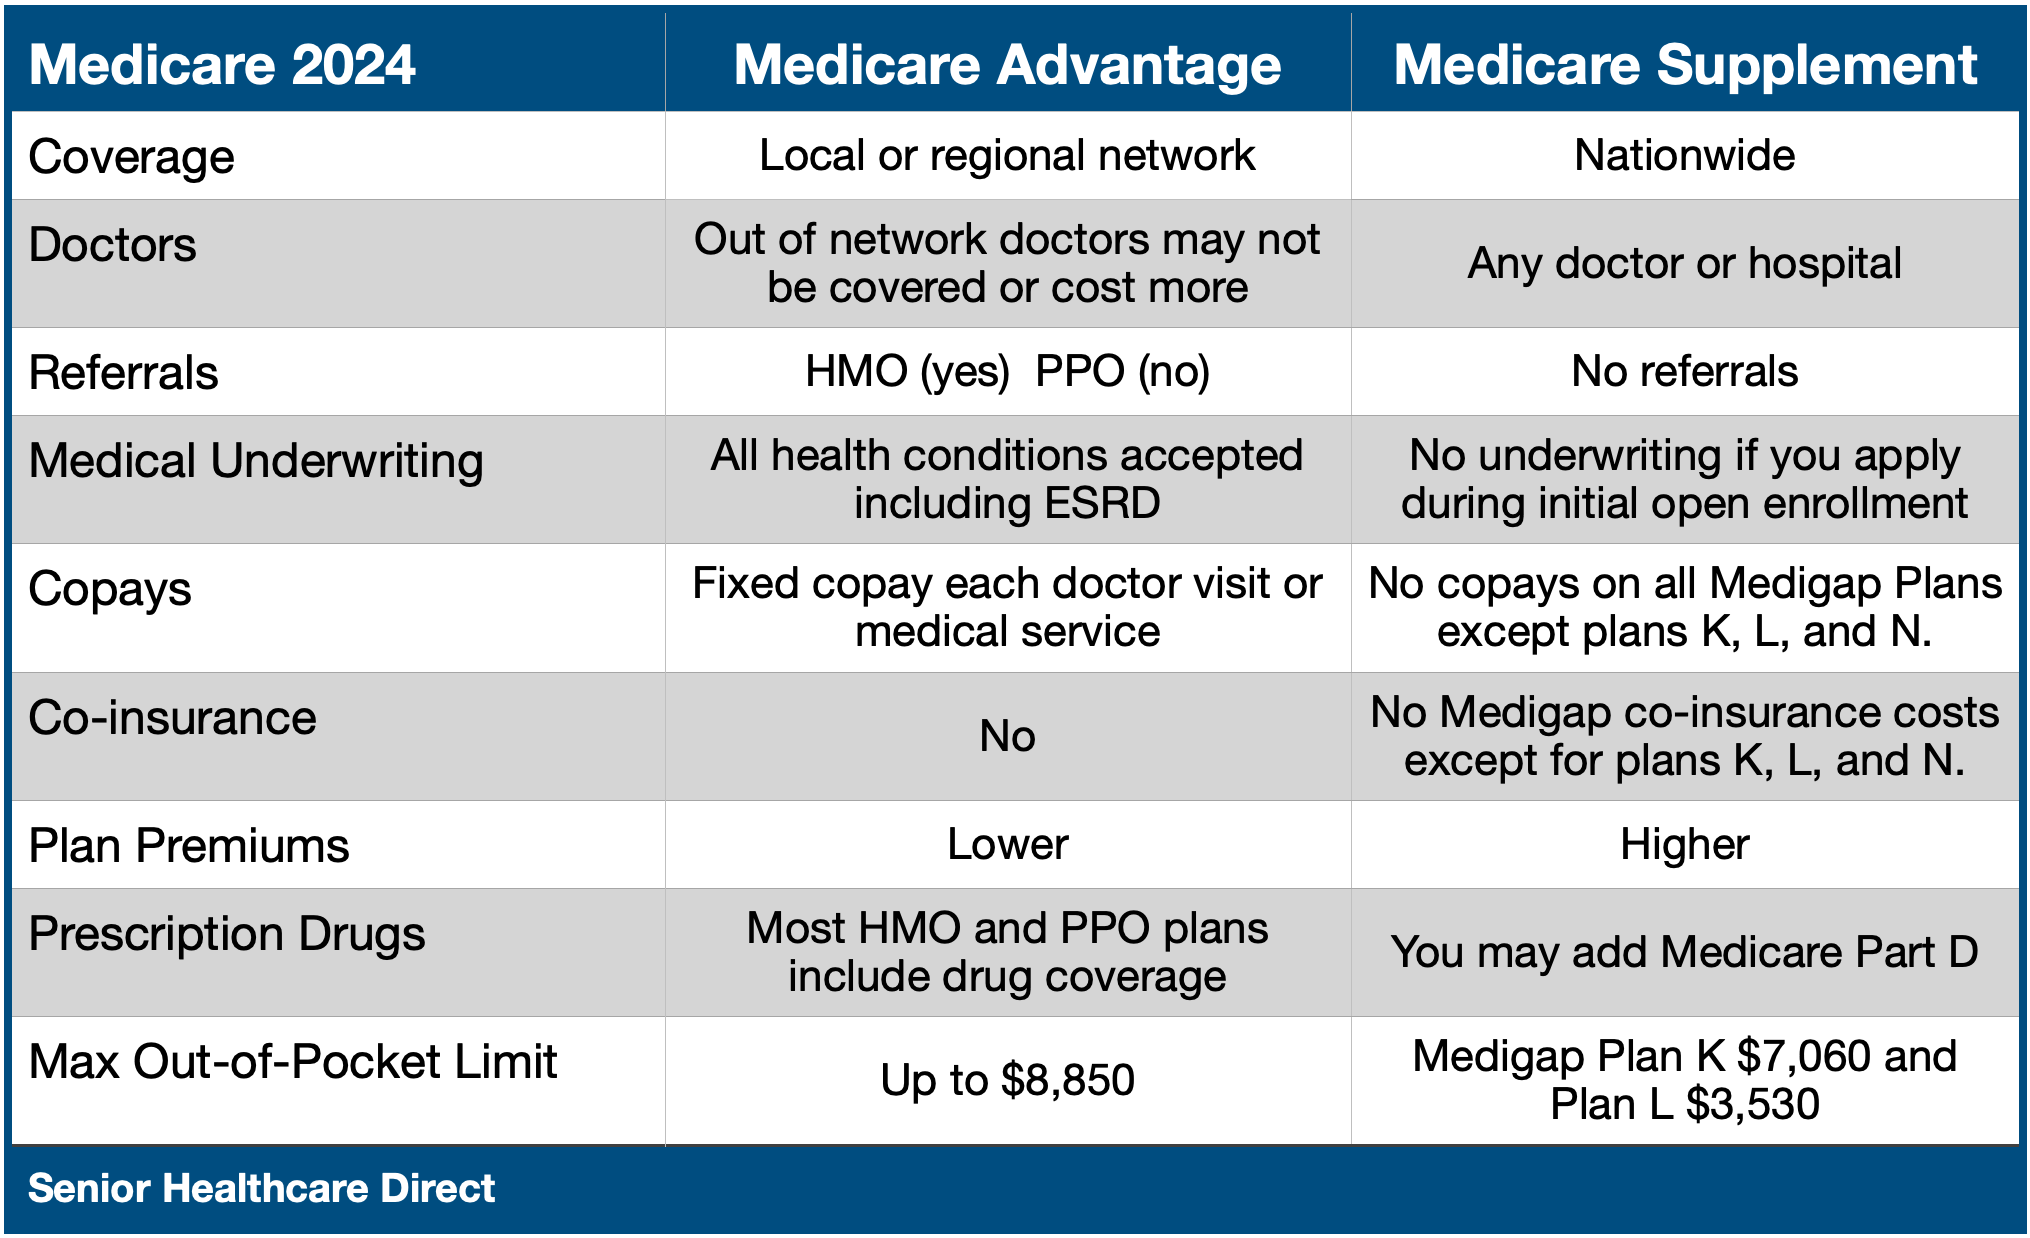 Medicare Advantage vs Supplement.png